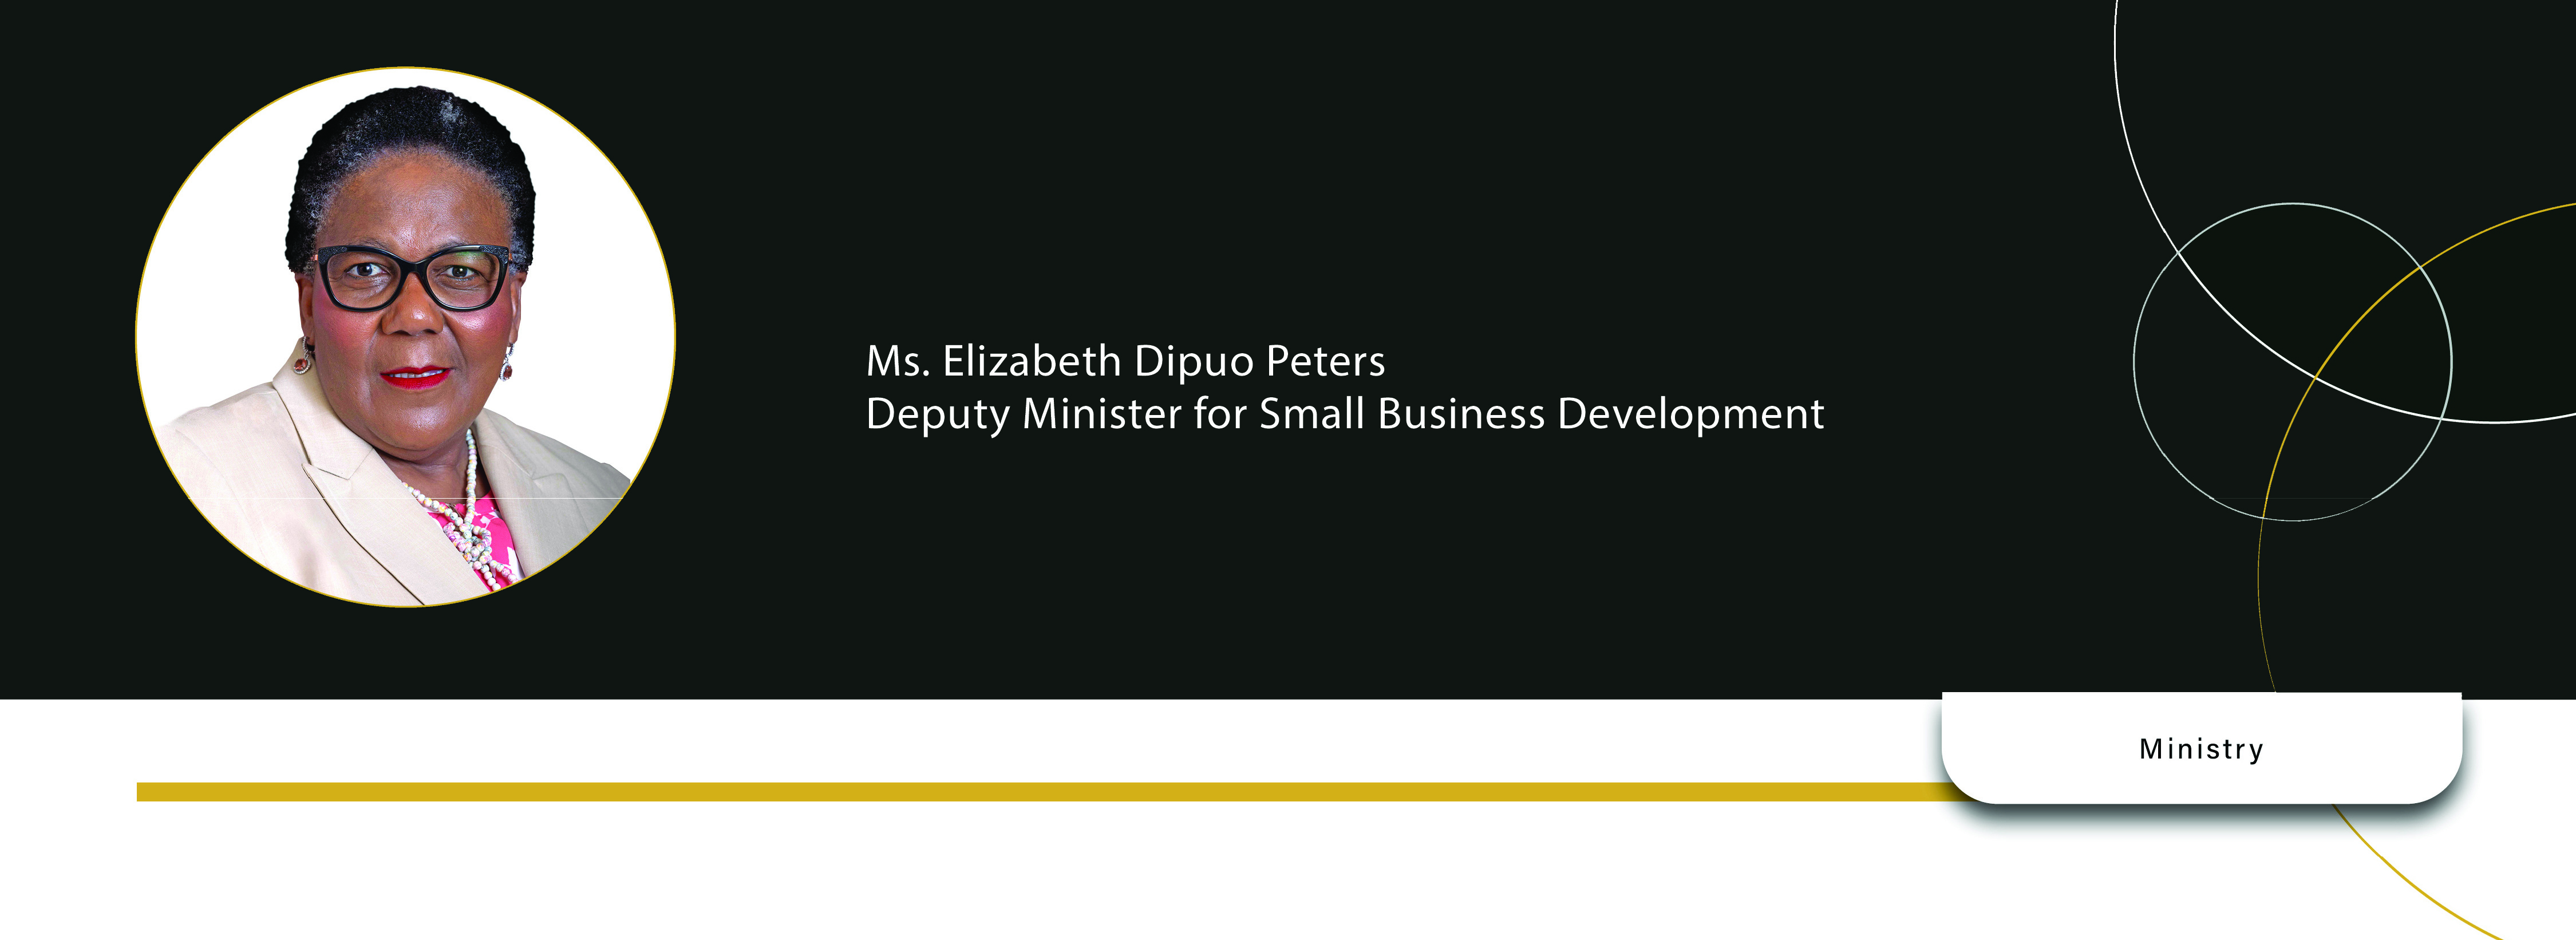 Department of Small Business Development Deputy Minister